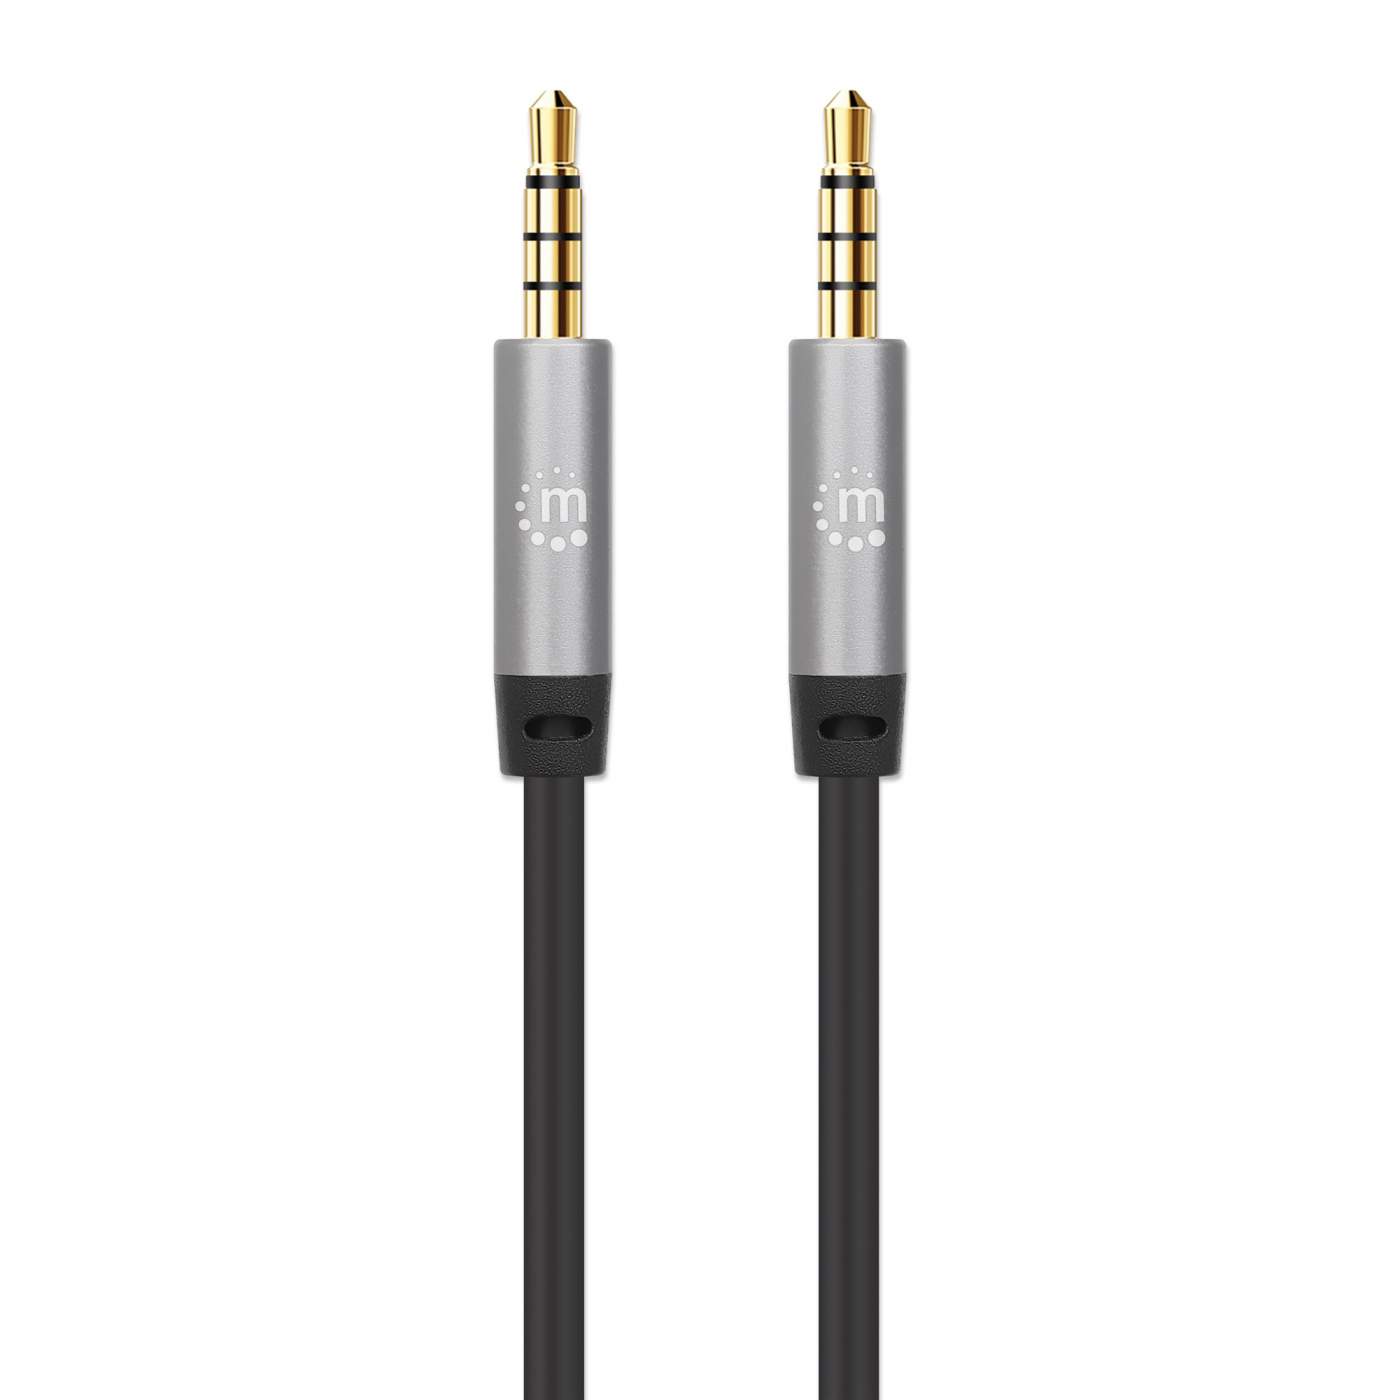 Cable de sonido de 3,5 mm estéreo auxiliar a Cable auxiliar compatible para  teléfono, teléfonos inteligentes, tabletas, reproductores multi 1 m Gloria  cable de extensión de audio